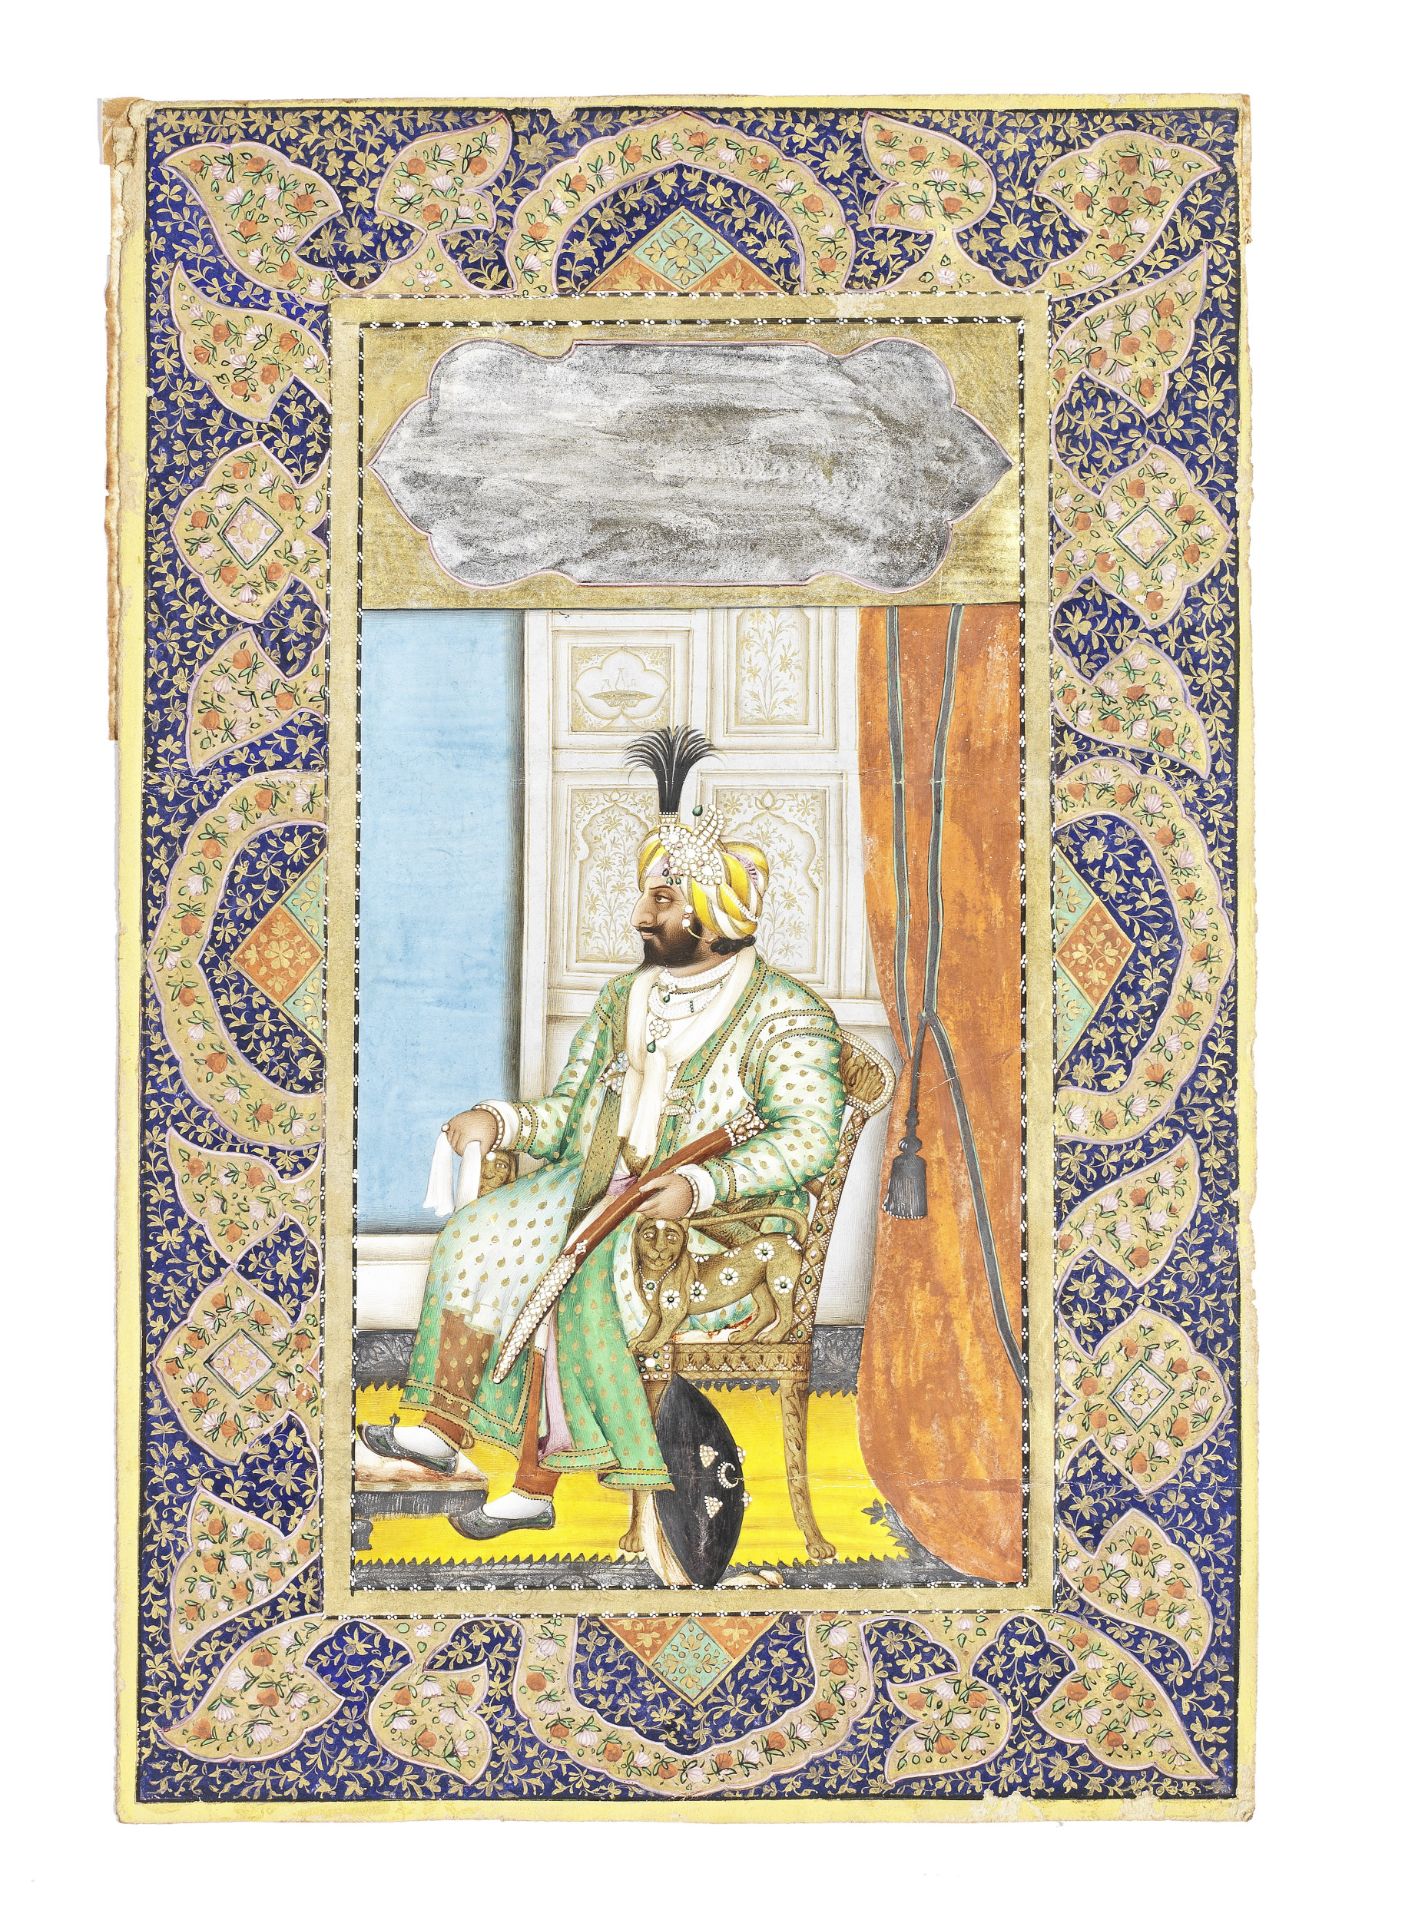 Maharajah Gulab Singh (1792-1857) seated in a European-style chair on a terrace Punjab, late 19th...